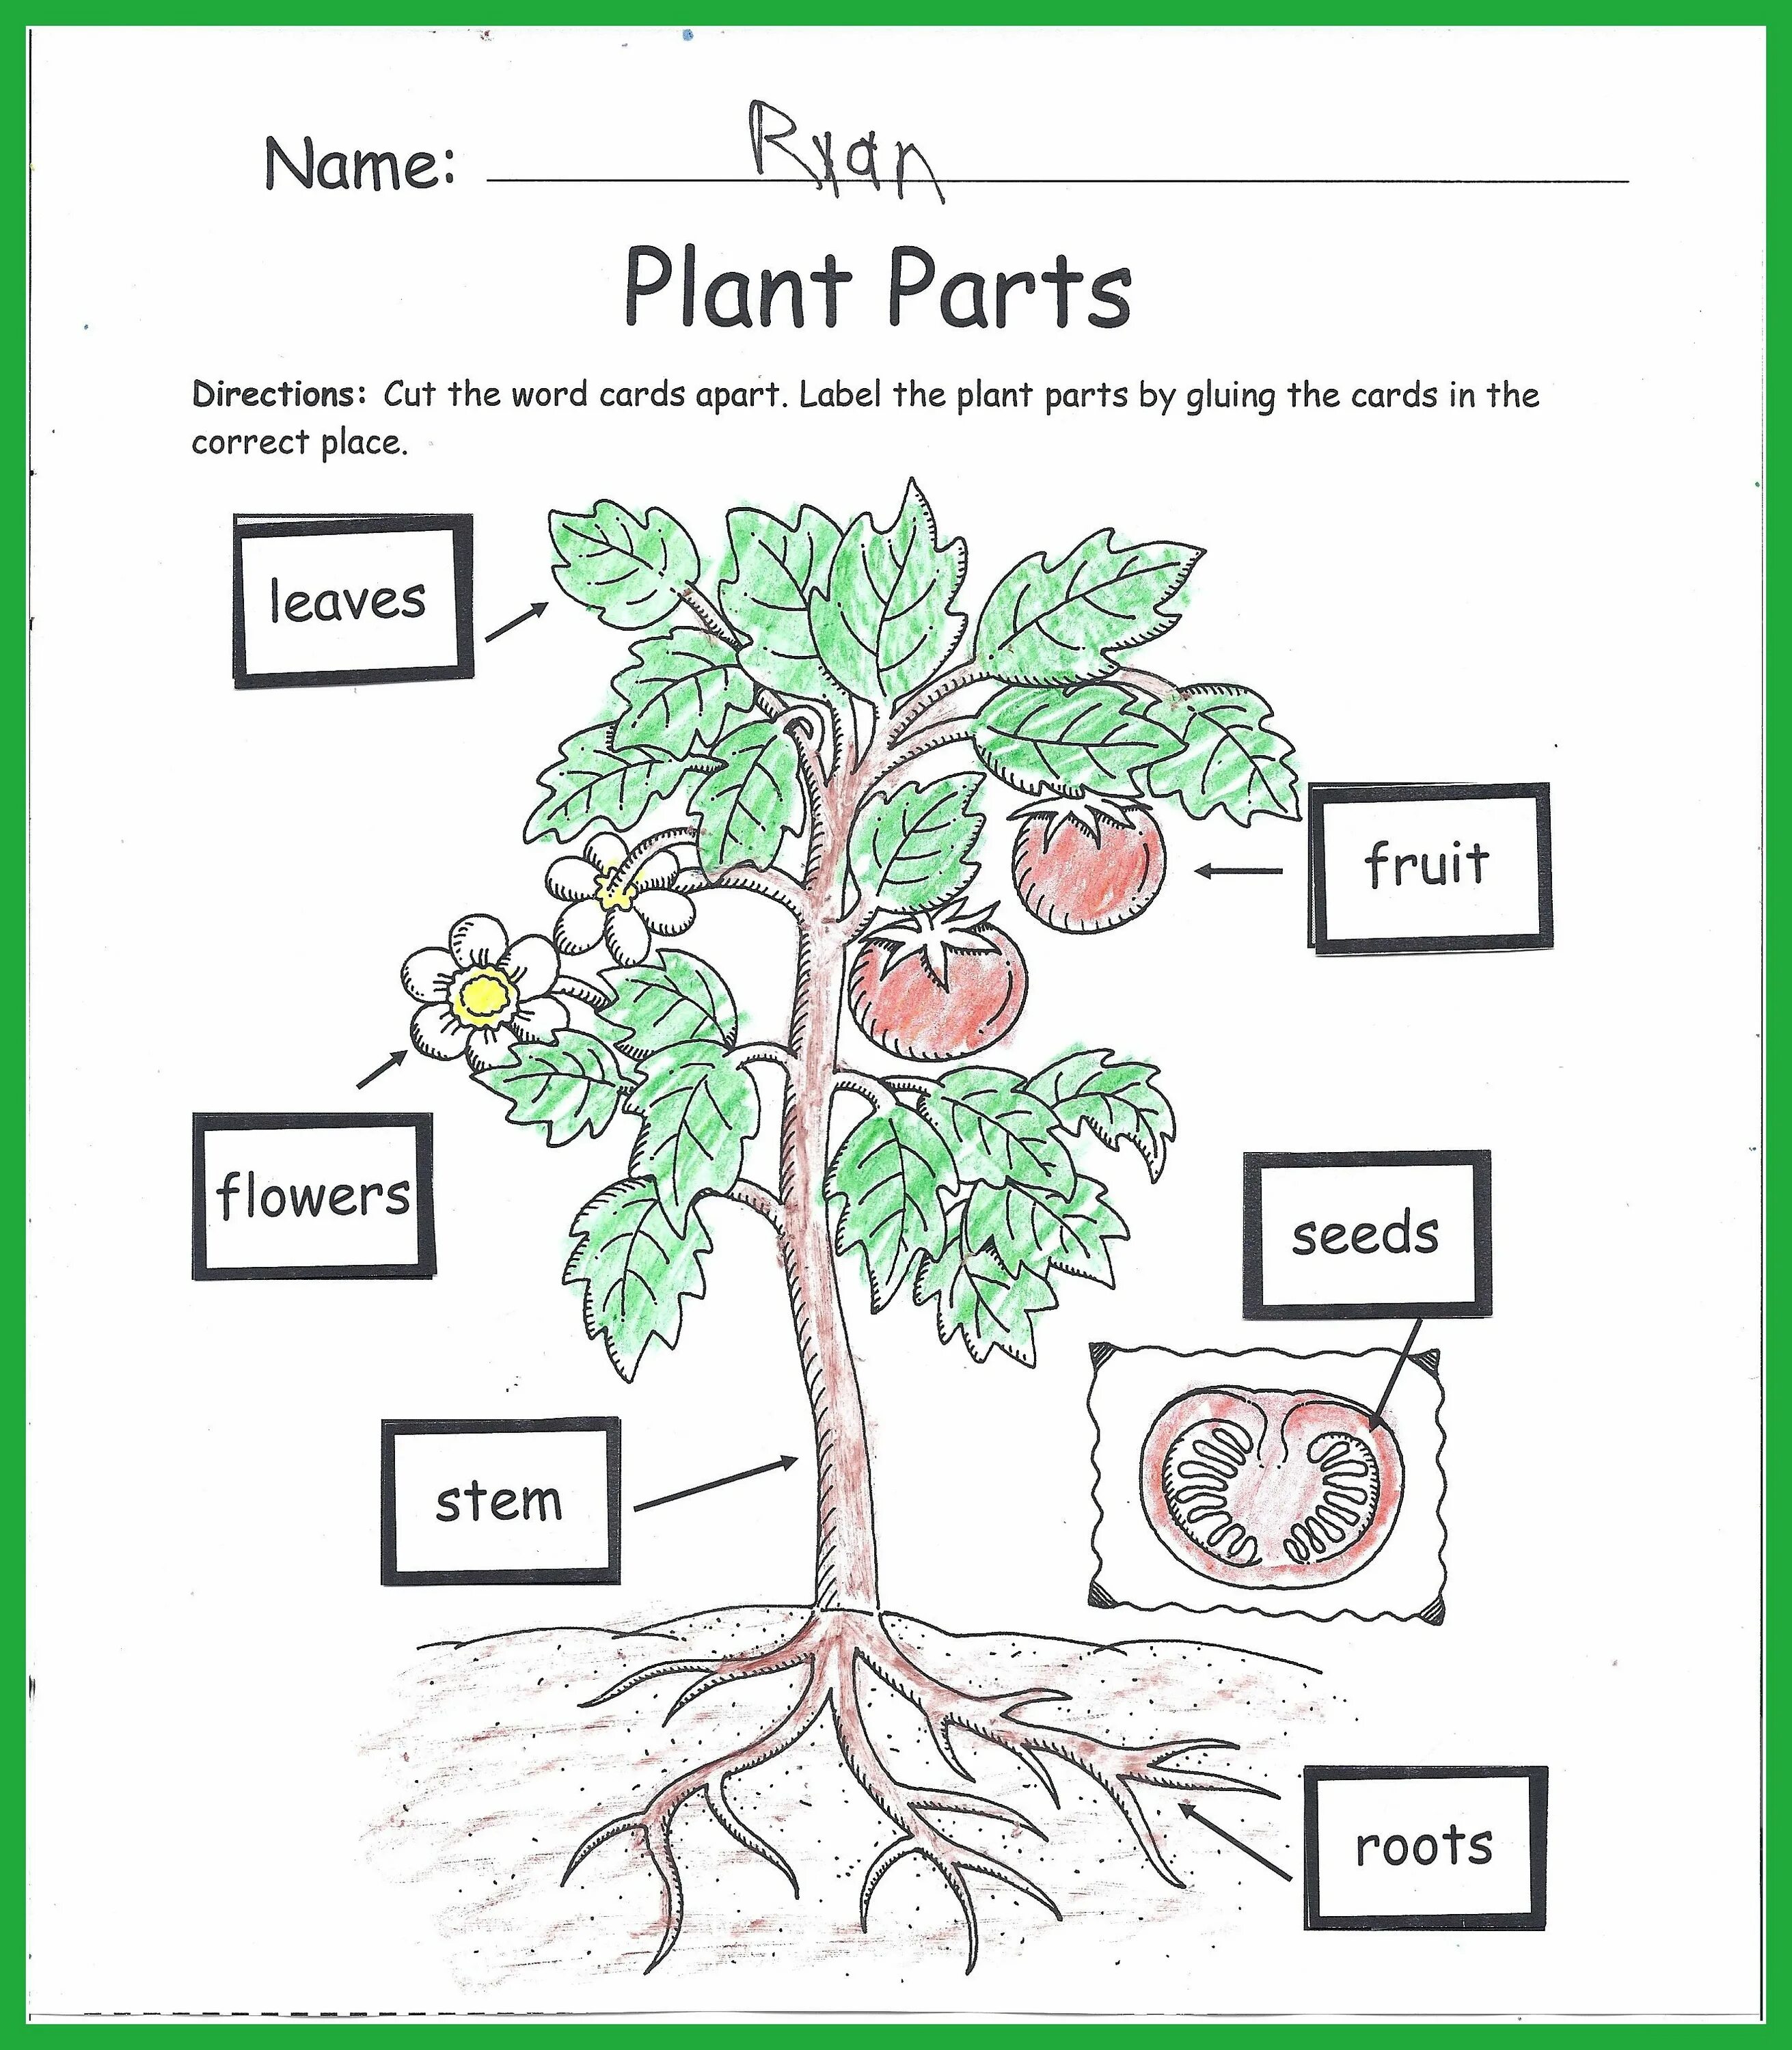 Plants english. Plants на английском для детей. Parts of a Plant. Parts of Plants for Kids. Plant на английском.